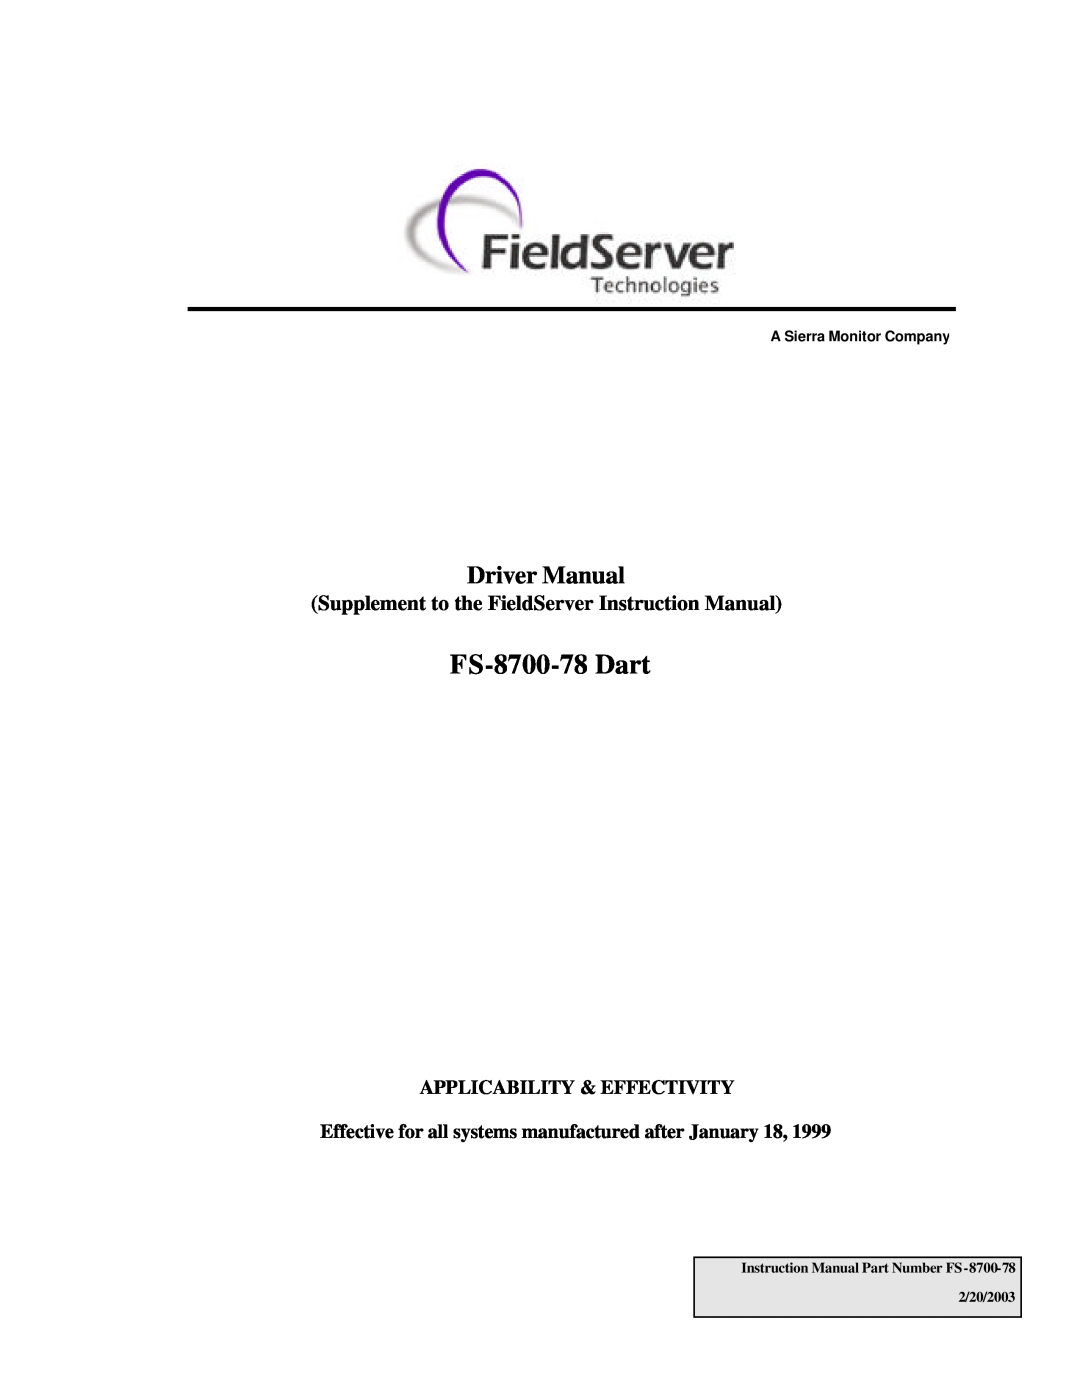 FieldServer FS-8700-78 instruction manual Supplement to the FieldServer Instruction Manual, Applicability & Effectivity 